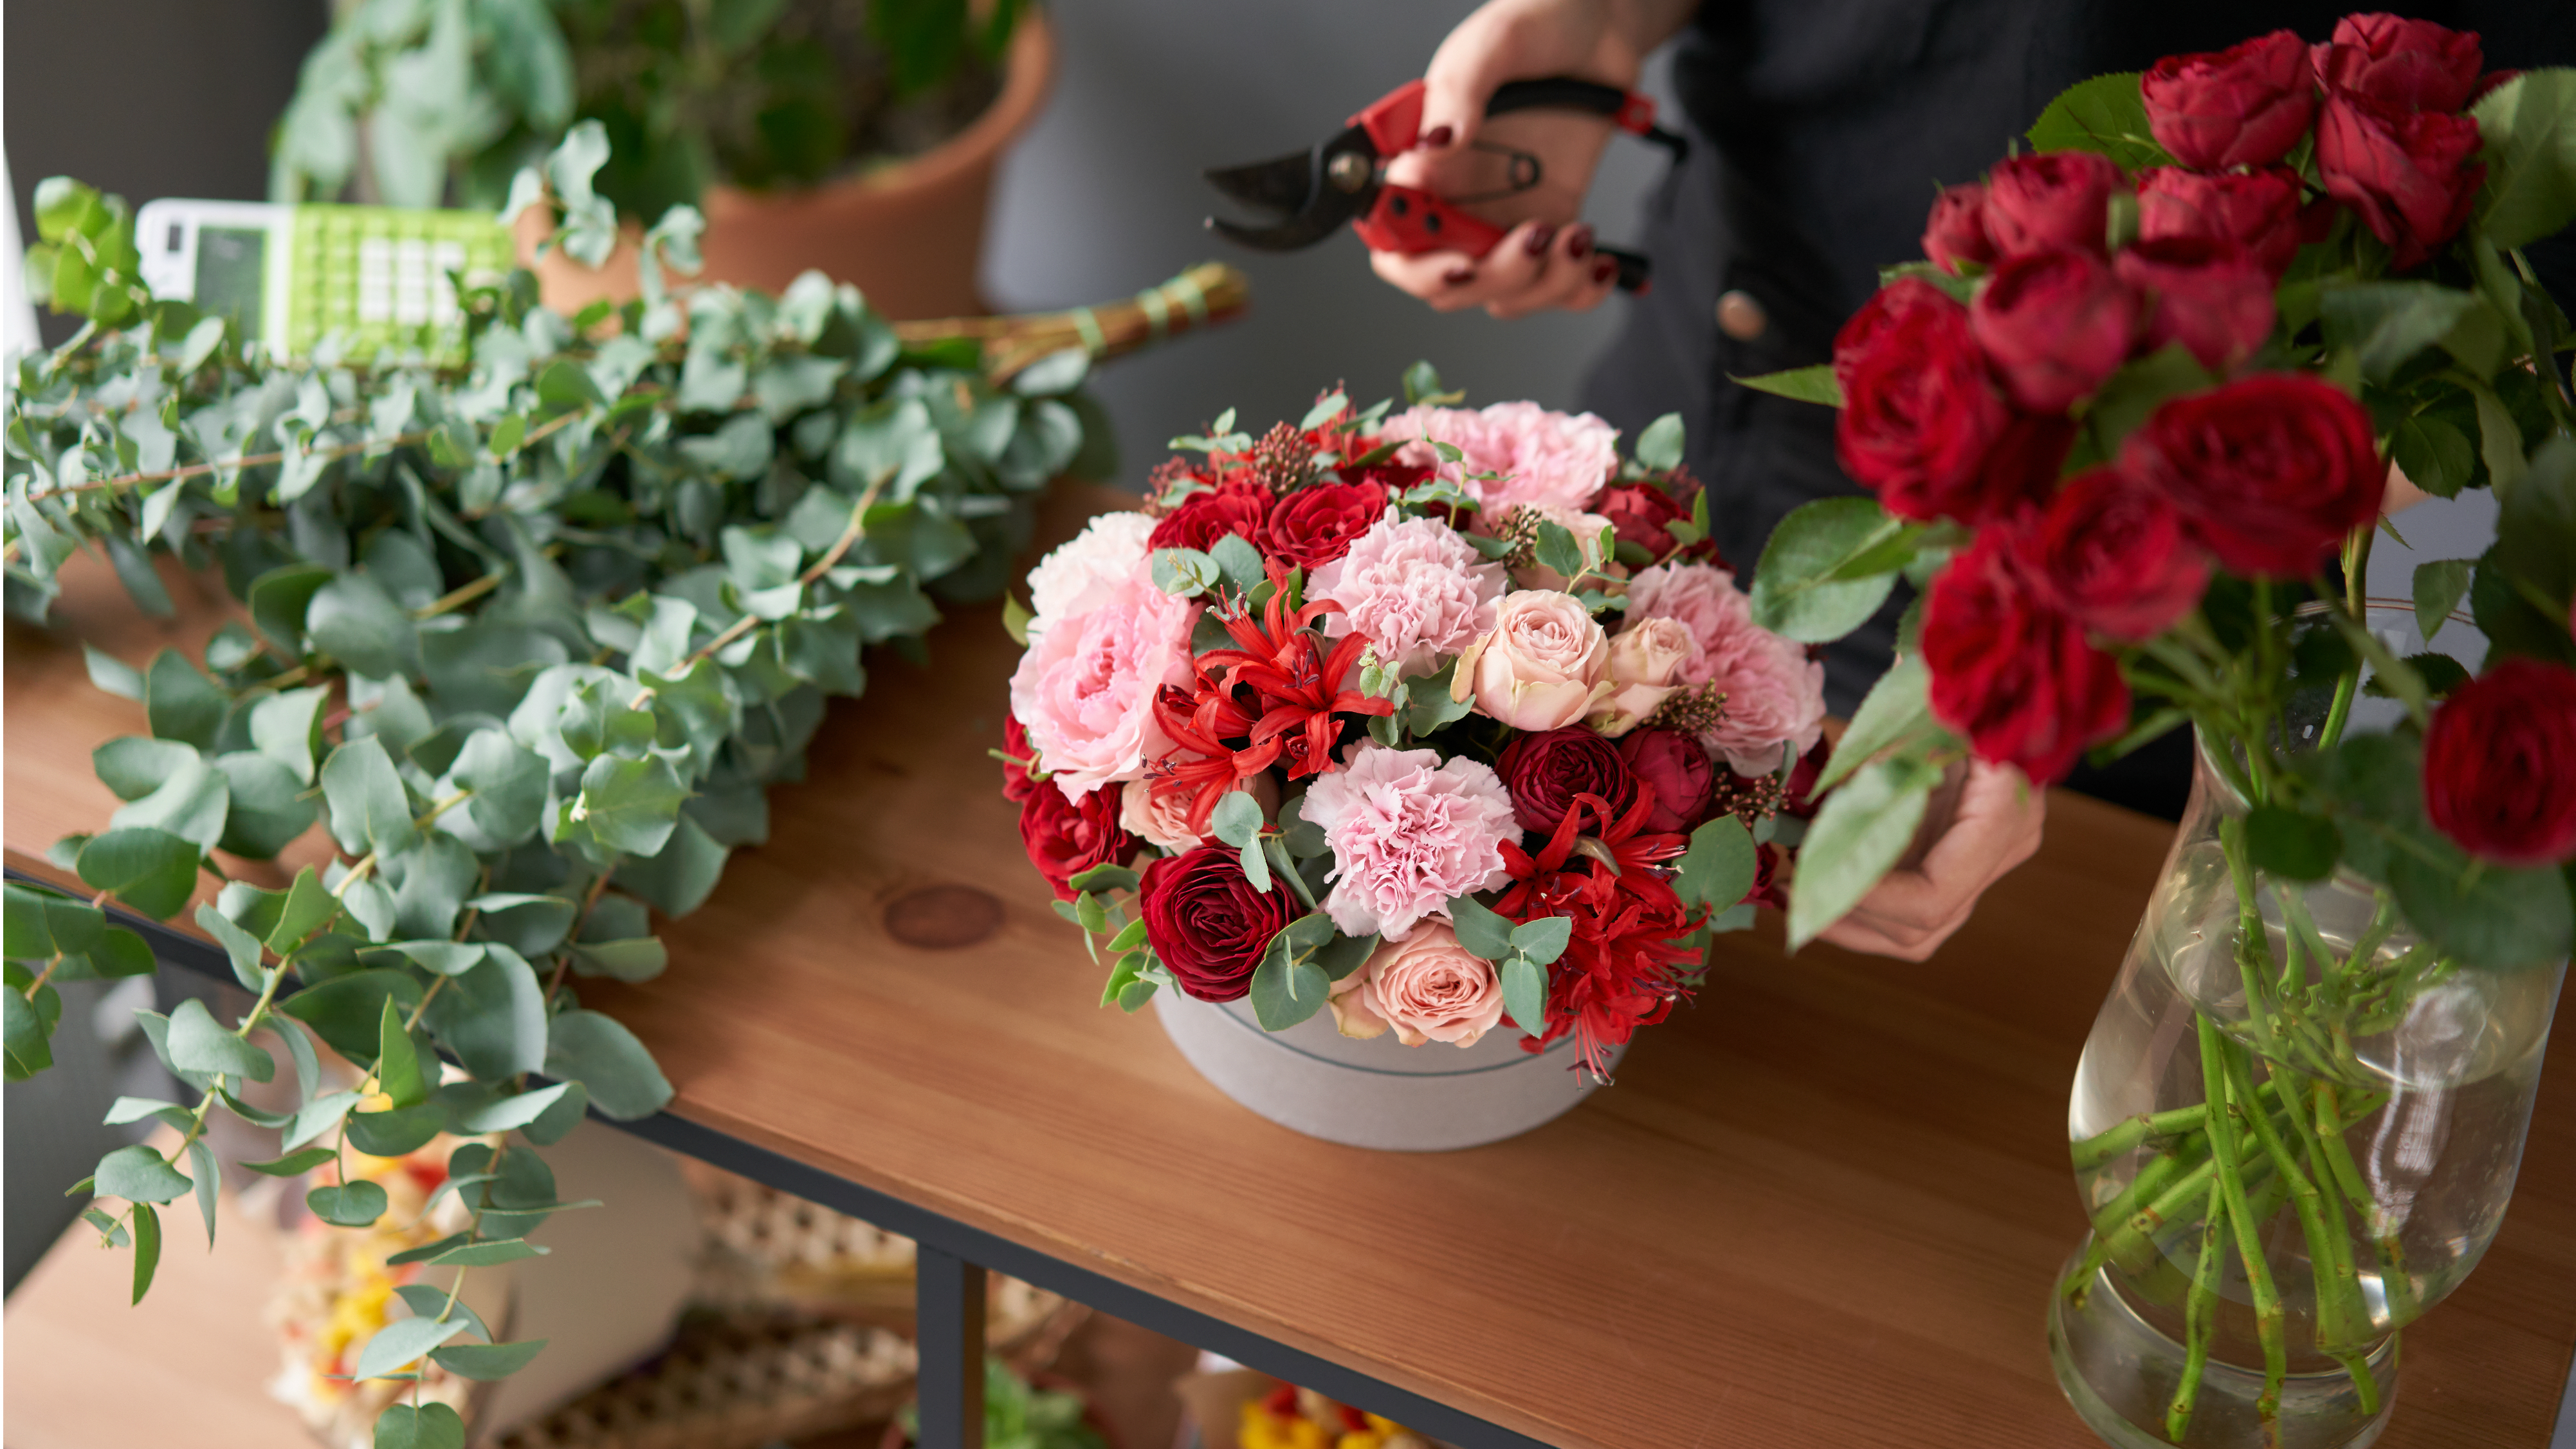 Send Cheap Flowers Using Online Florists